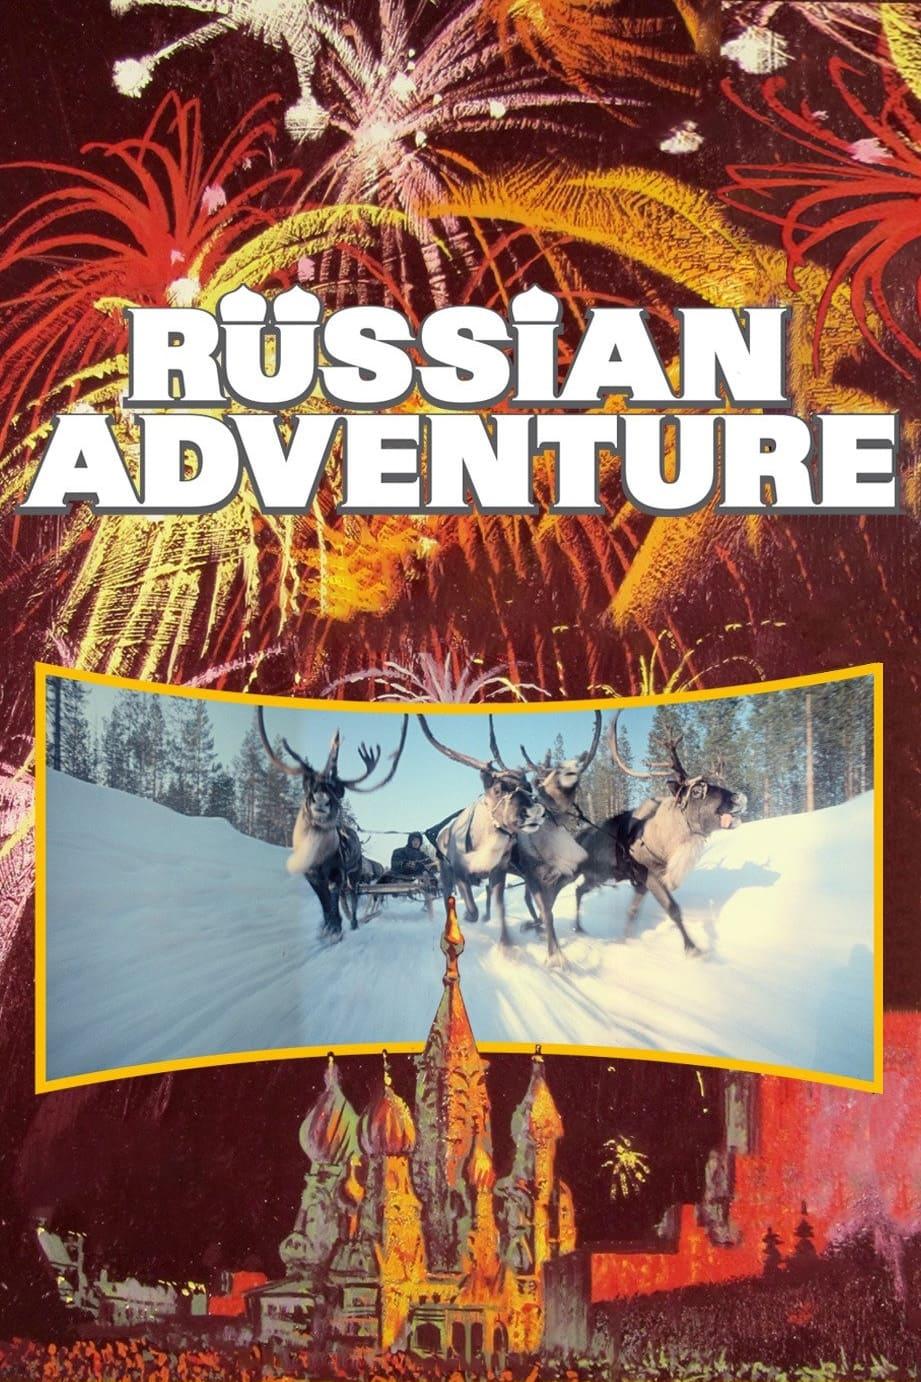 Cinerama's Russian Adventure poster